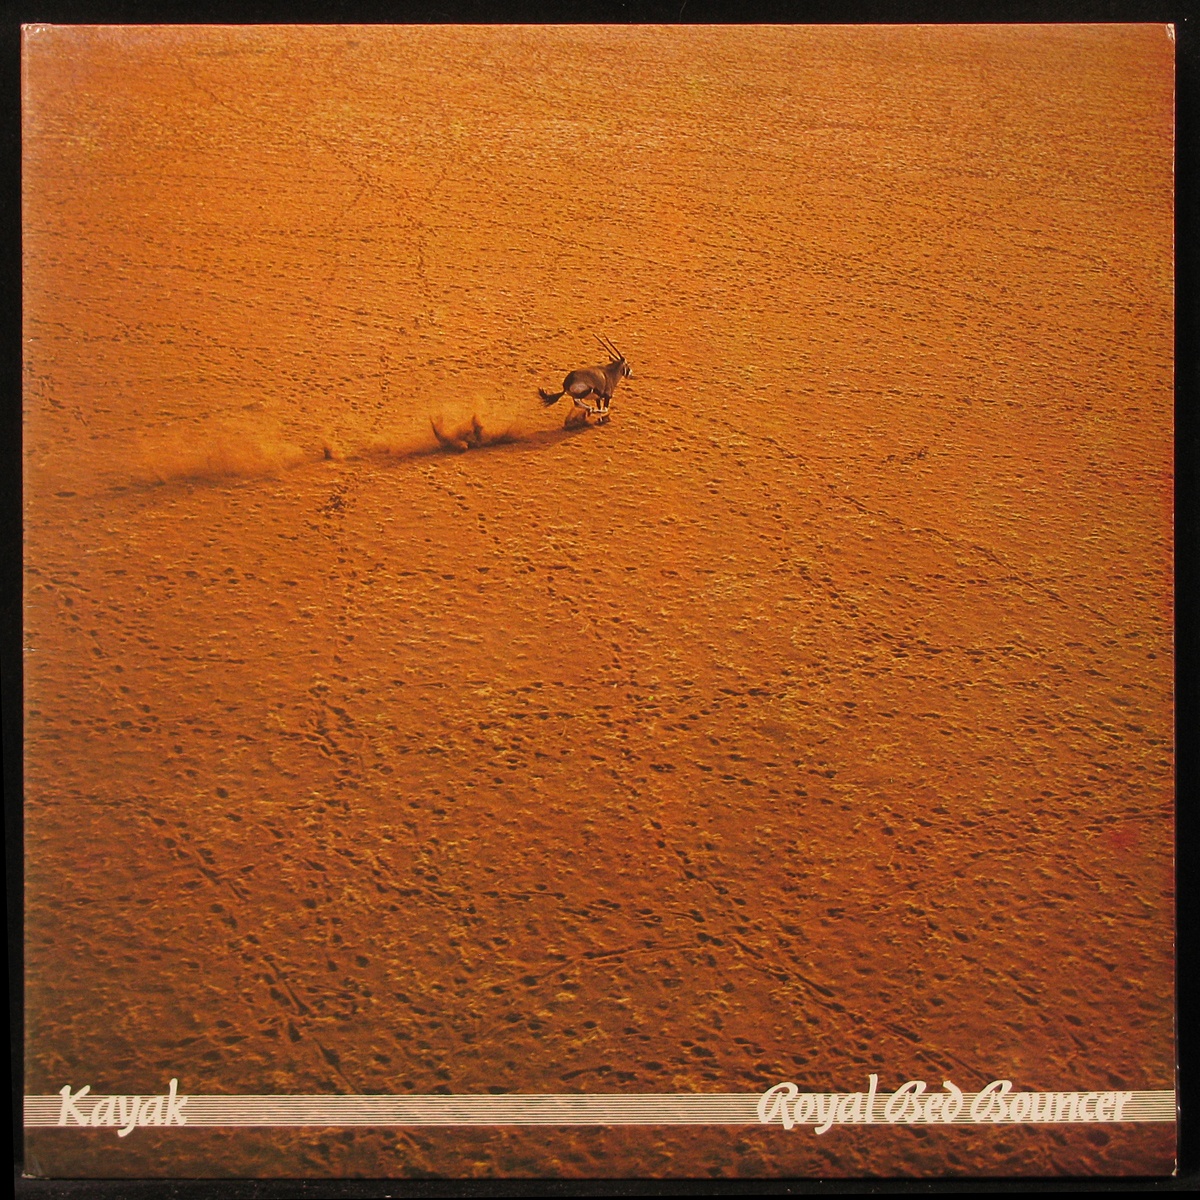 LP Kayak — Royal Bed Bouncer фото